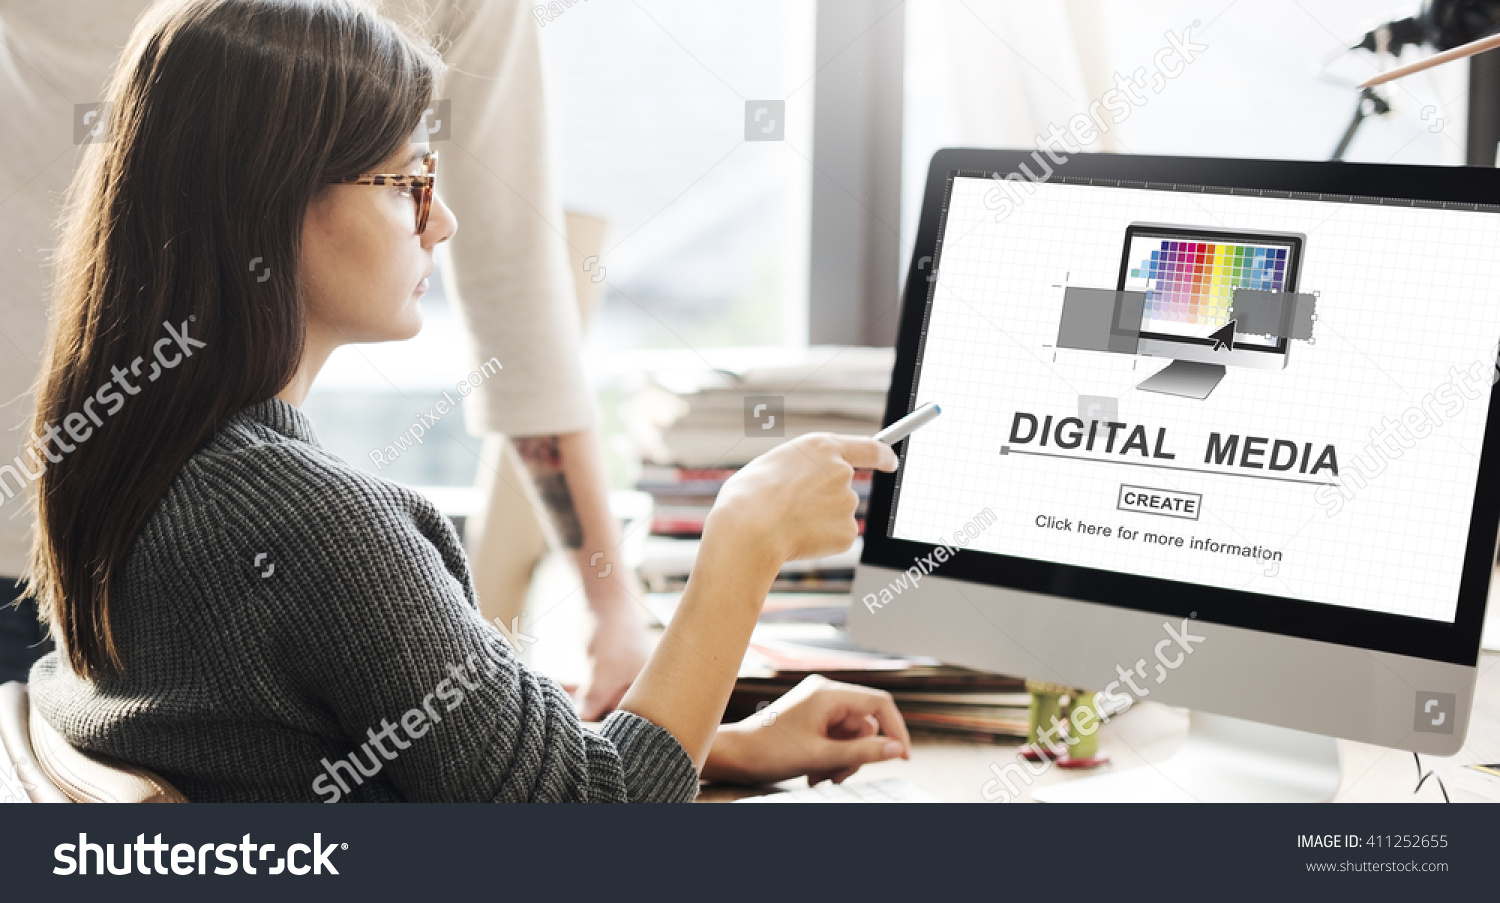 Digital Marketing Media Web Design Ideas Concept #411252655